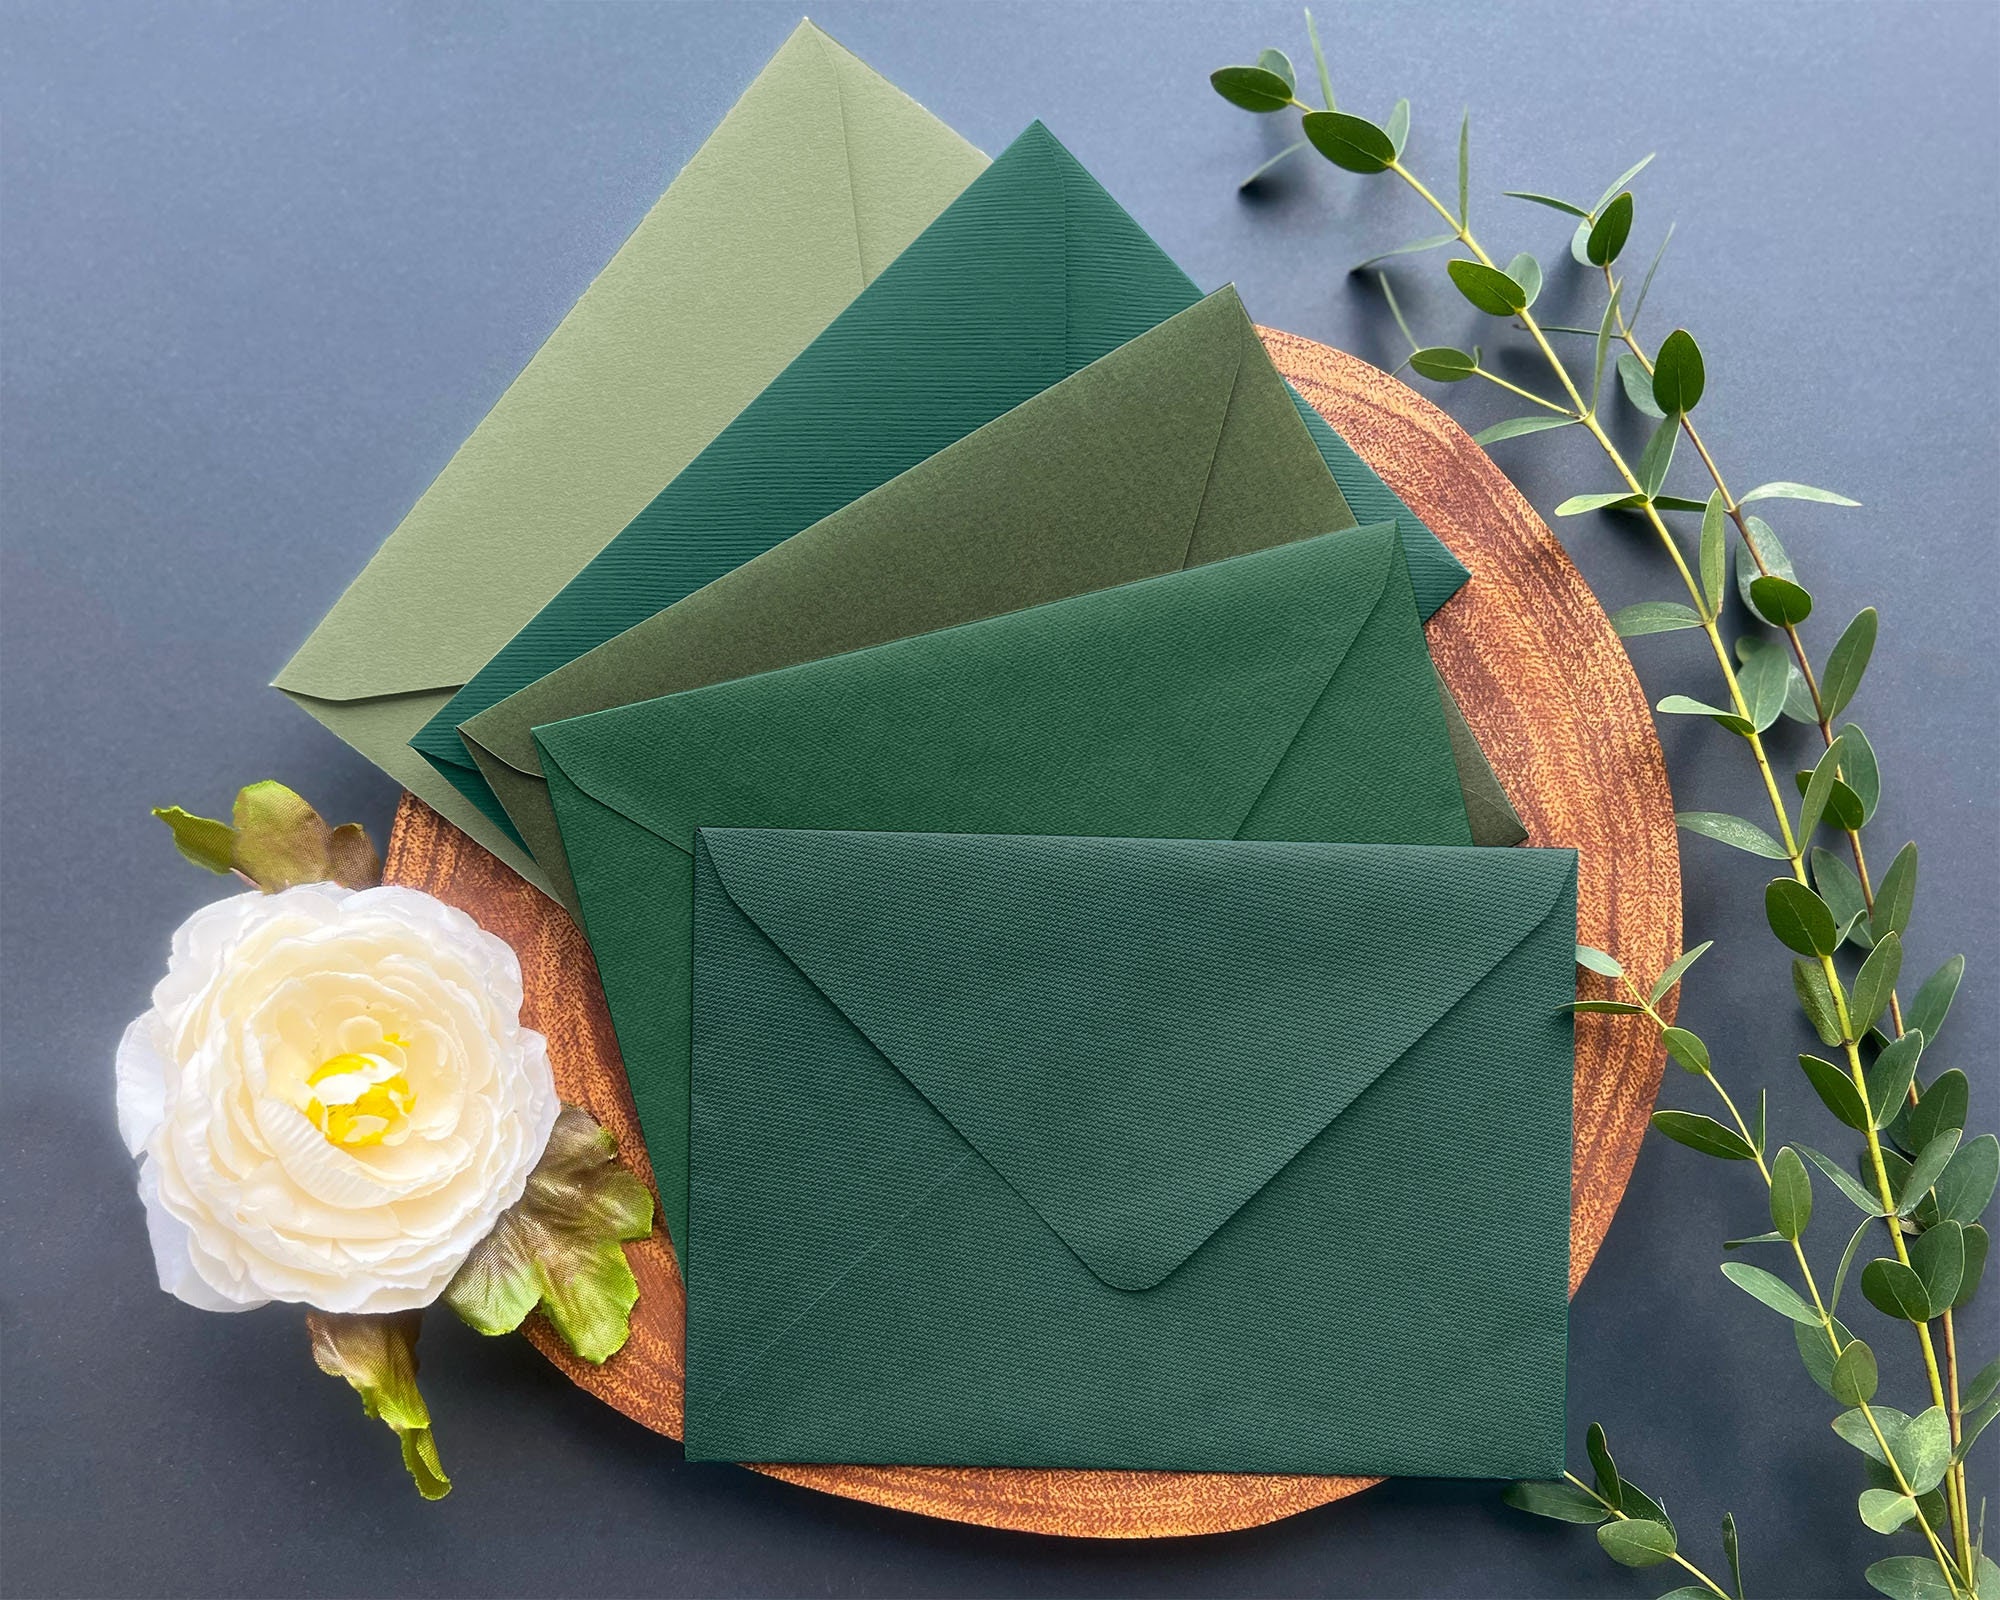 Macarons colors wedding envelopes /Sky blue envelope for wedding